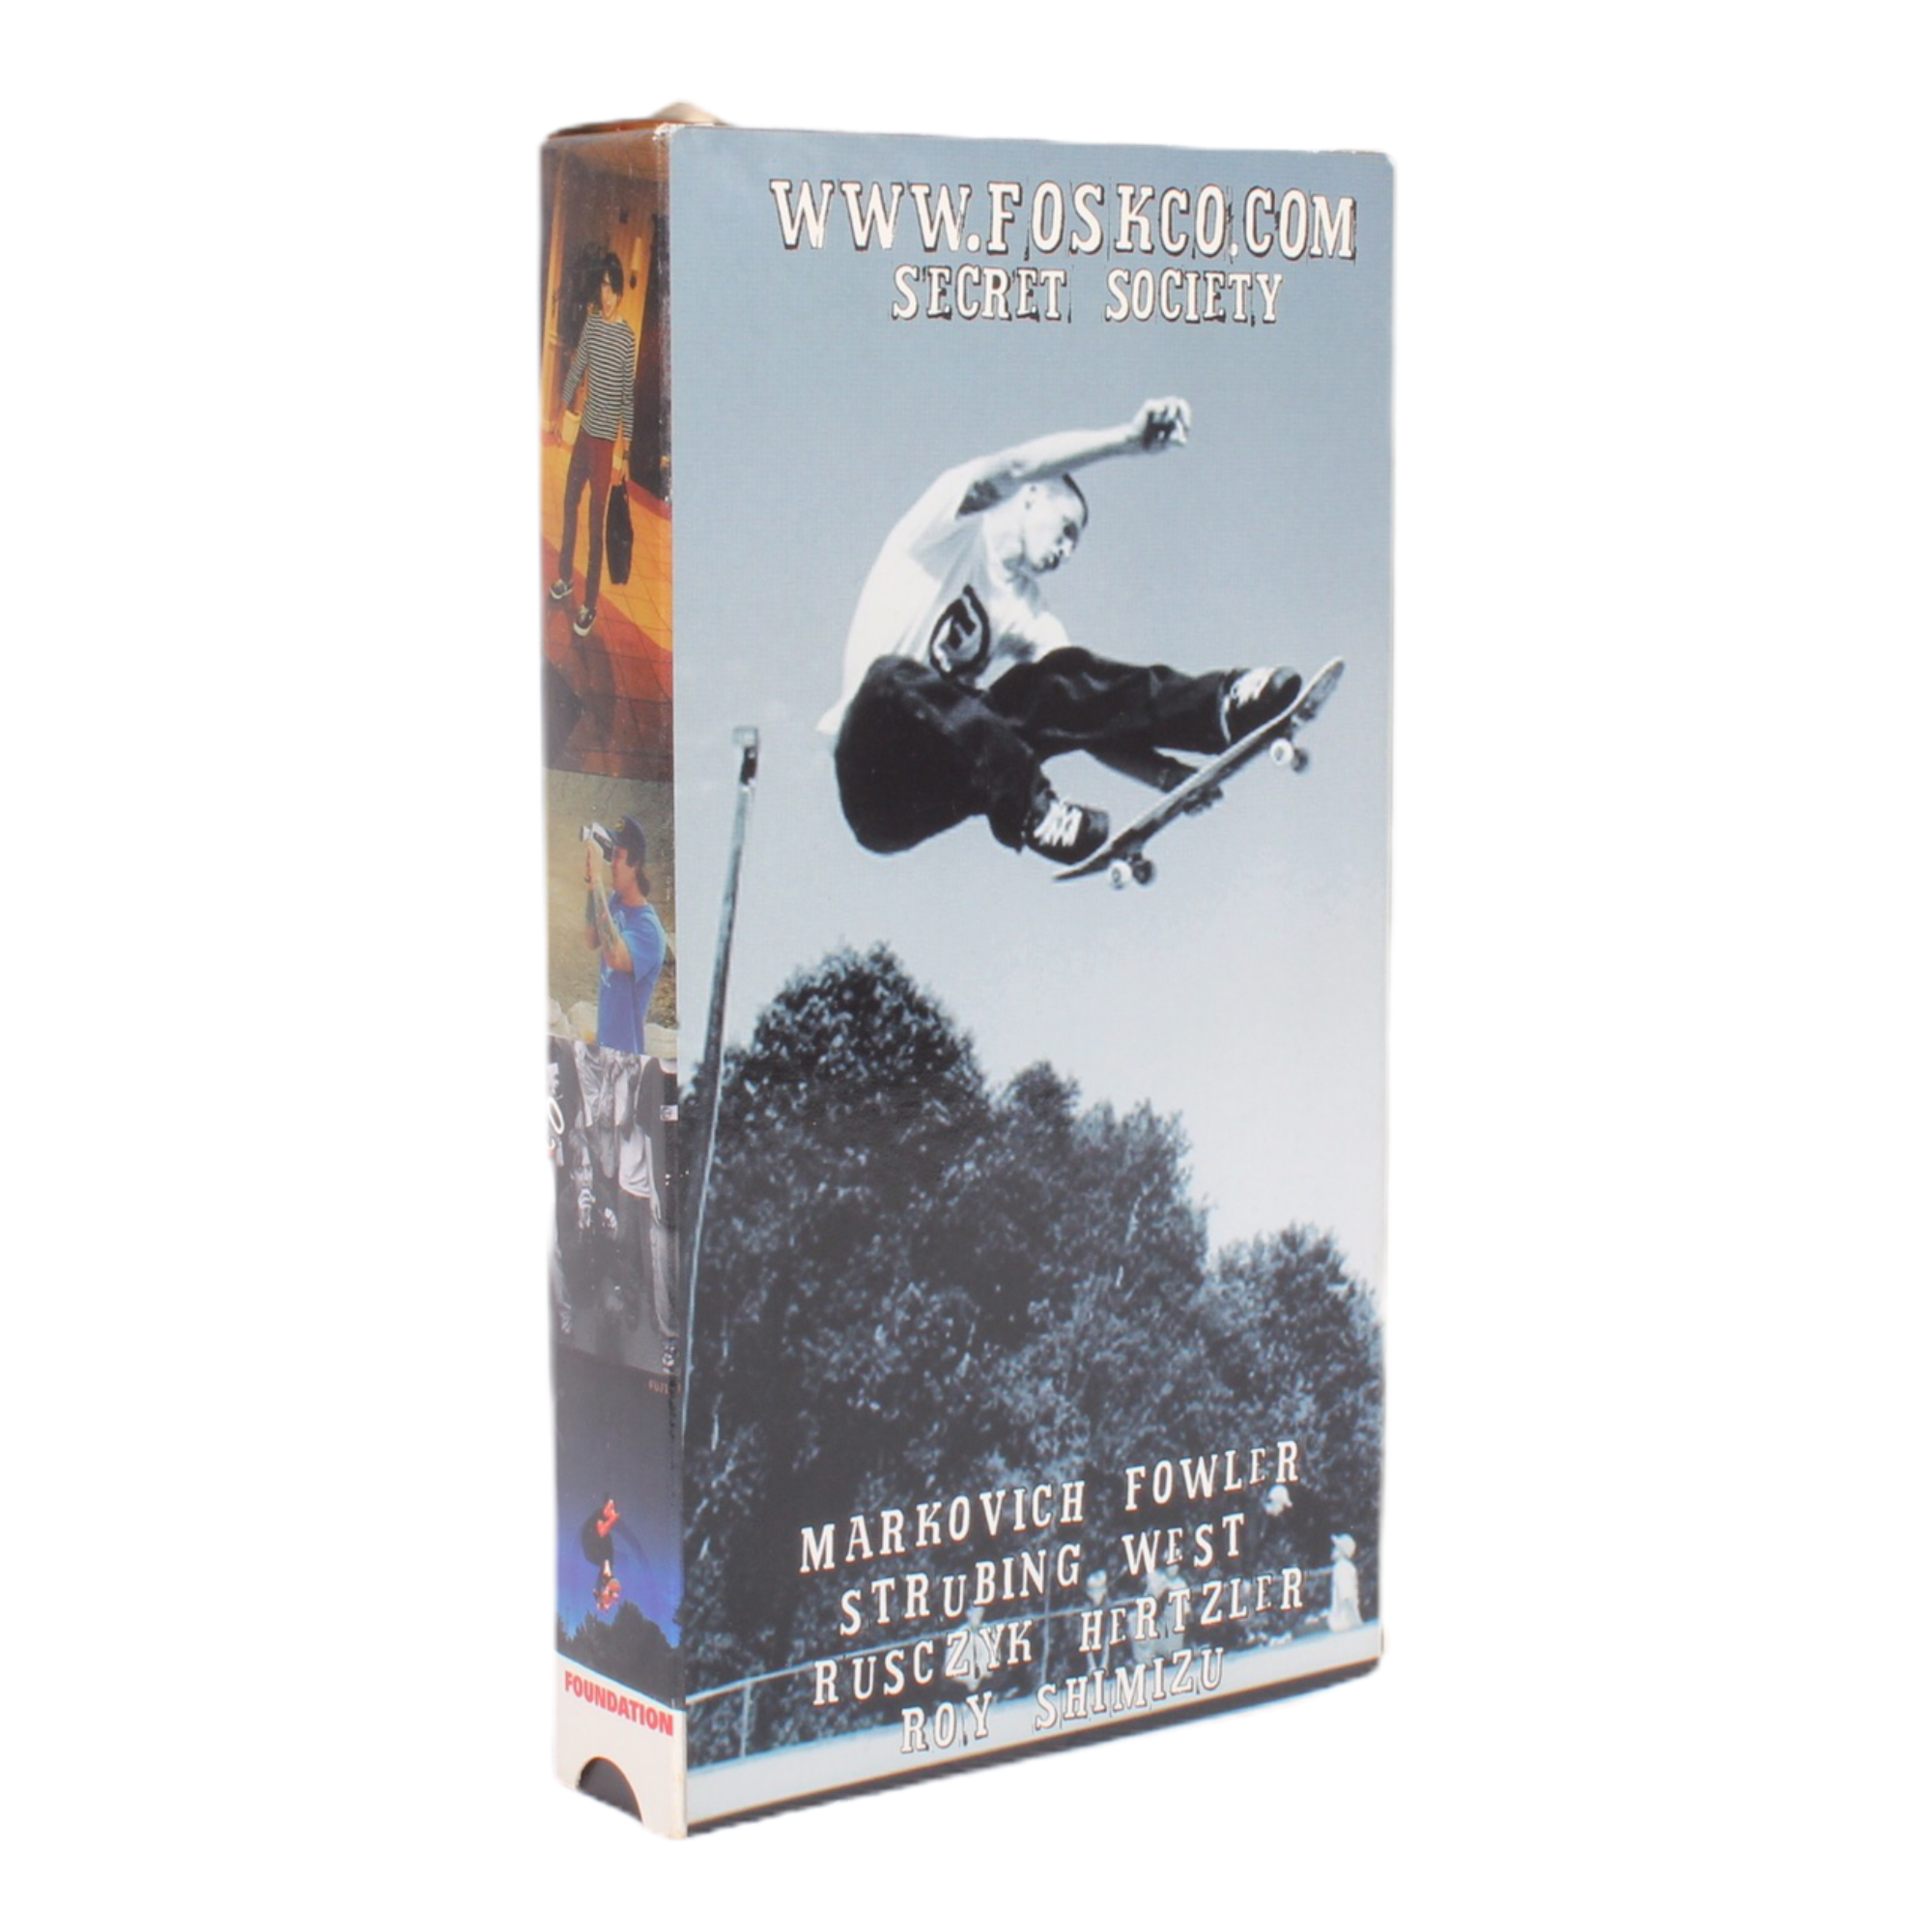 Fancy Lad Secrets Of The Clown Box USB VHS Stick - Orchard Skateshop